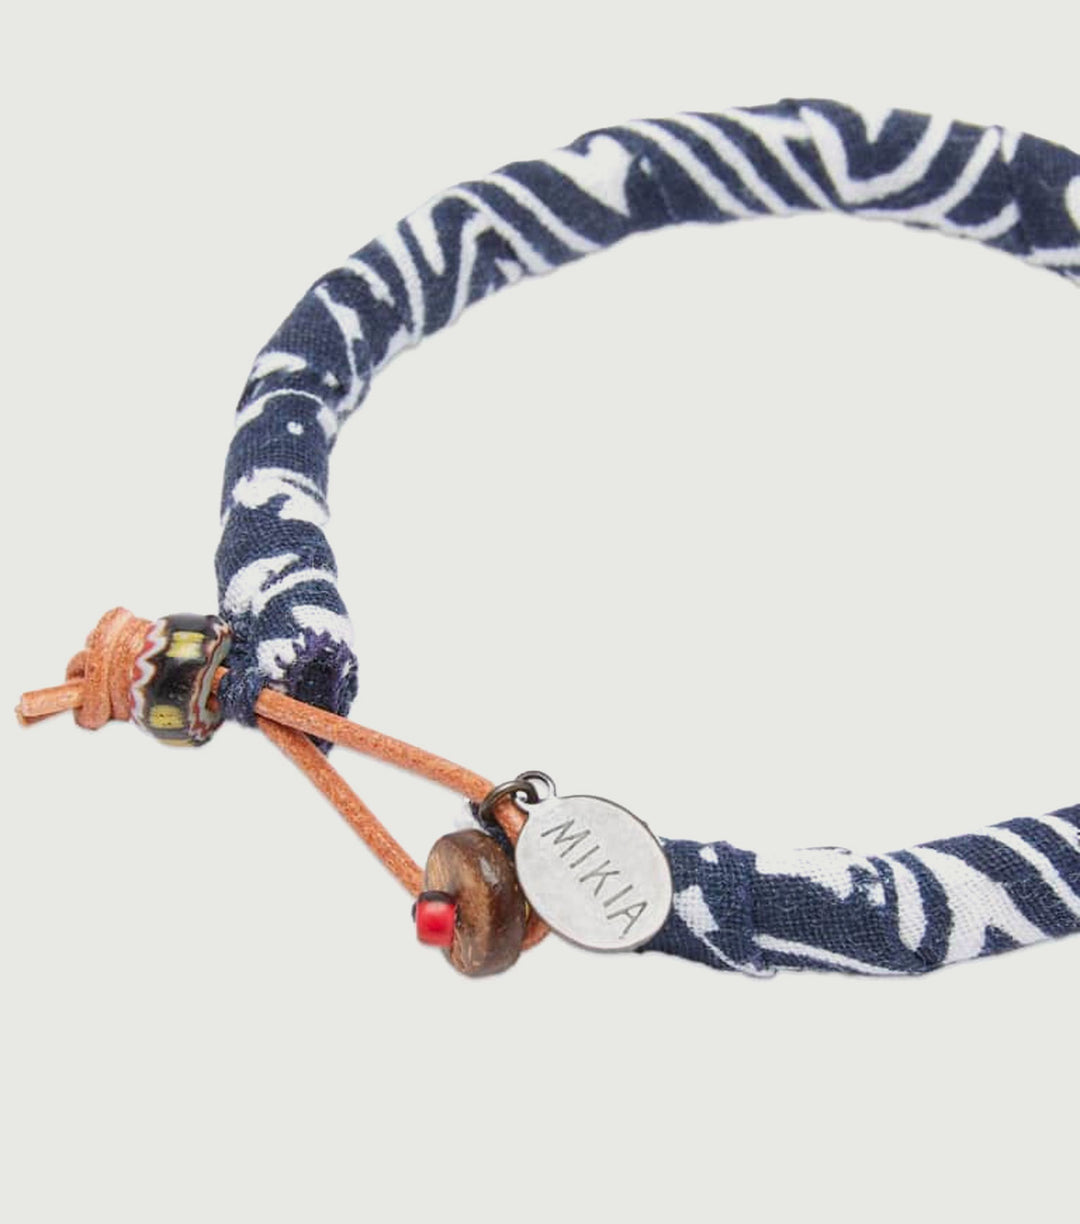 Bandana Bracelet Navy - Mikia